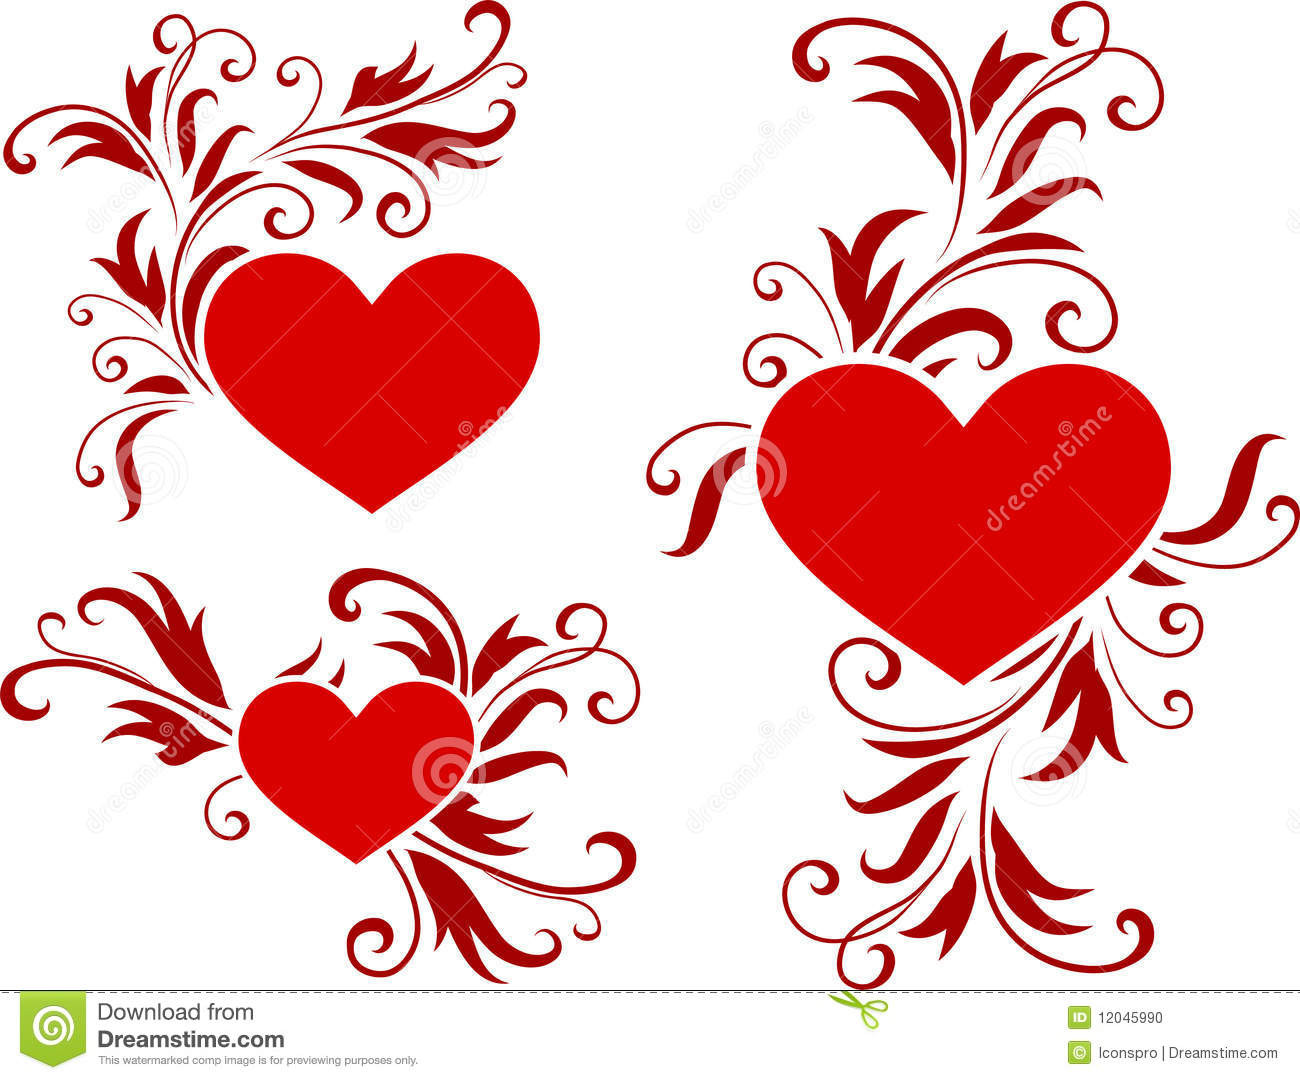 Valentines Day Design
 Romantic Hearts Valentine s Day Design Background Stock